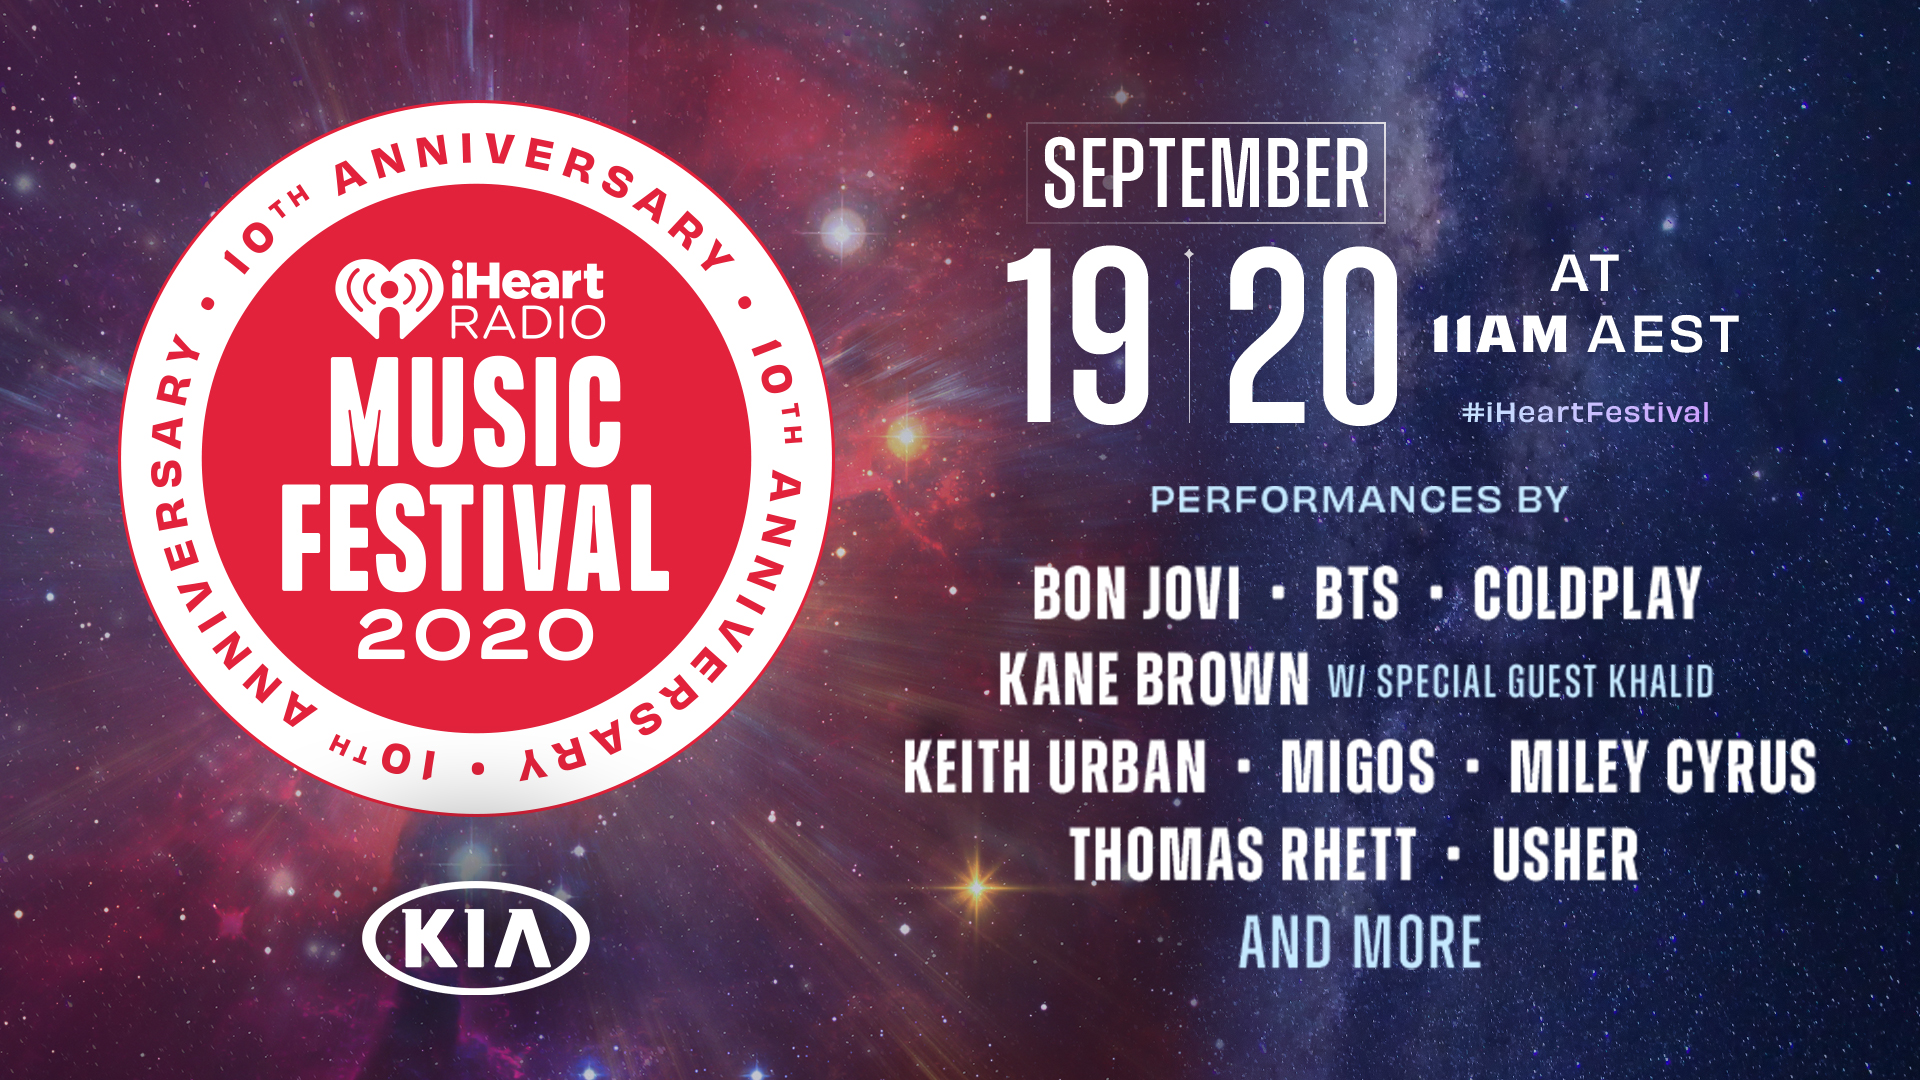 The 2020 iHeartRadio Music Festival iHeart